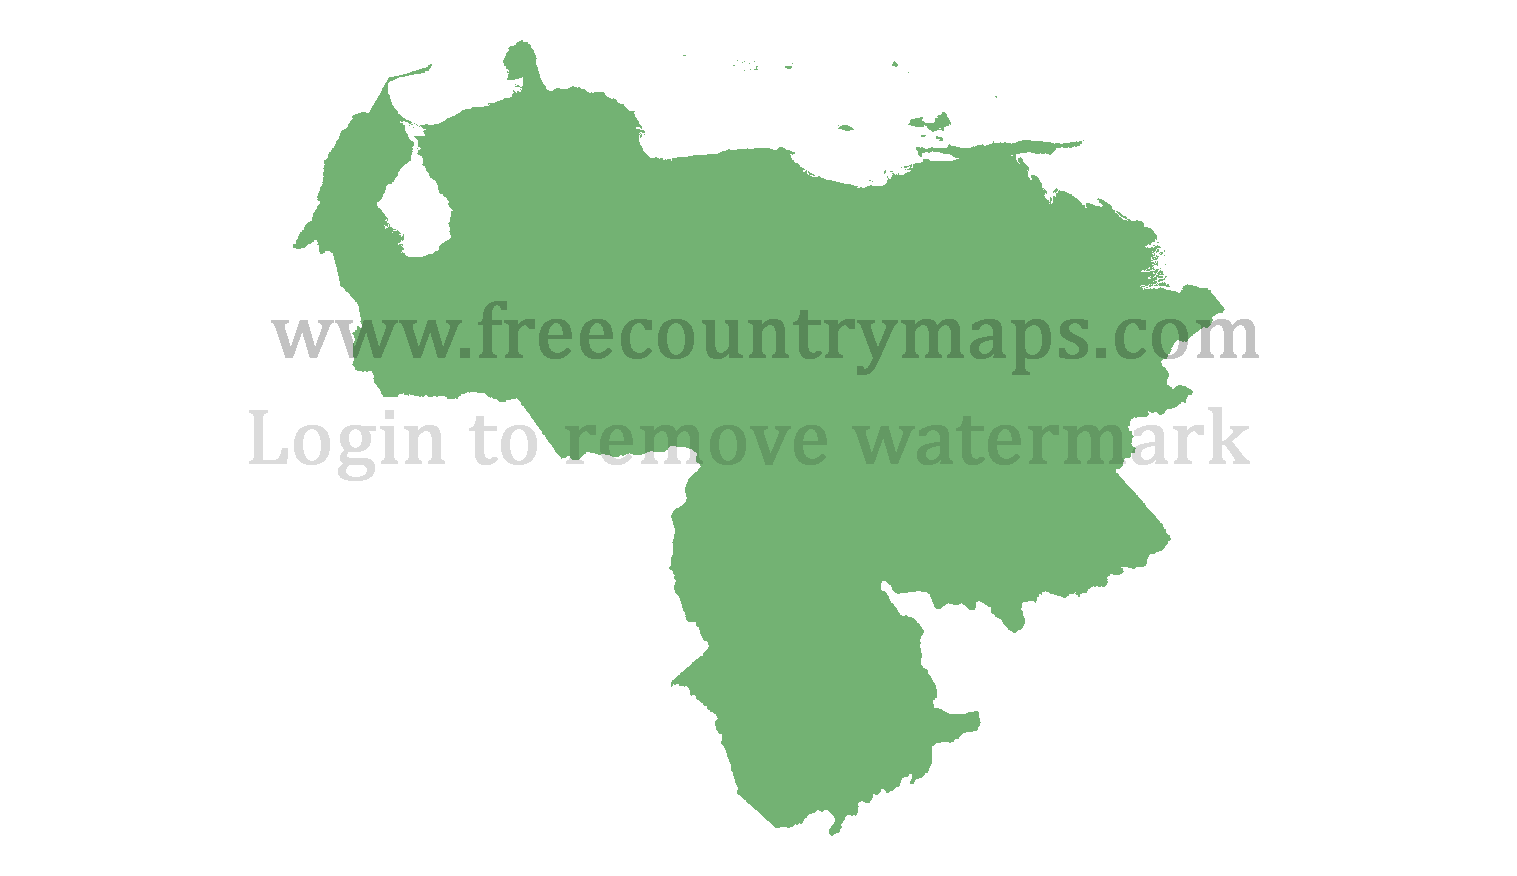 Blank Map of Venezuela